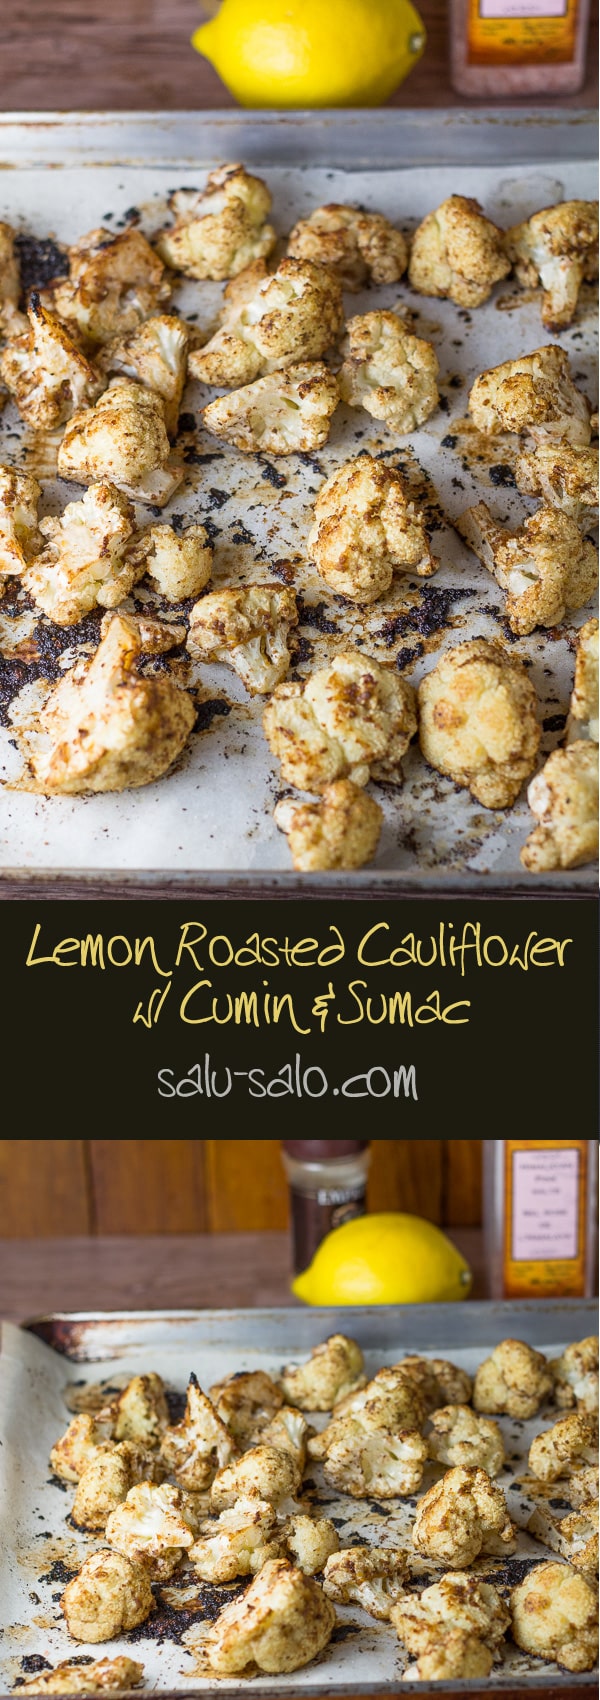 Lemon Roasted Cauliflower with Cumin and Sumac